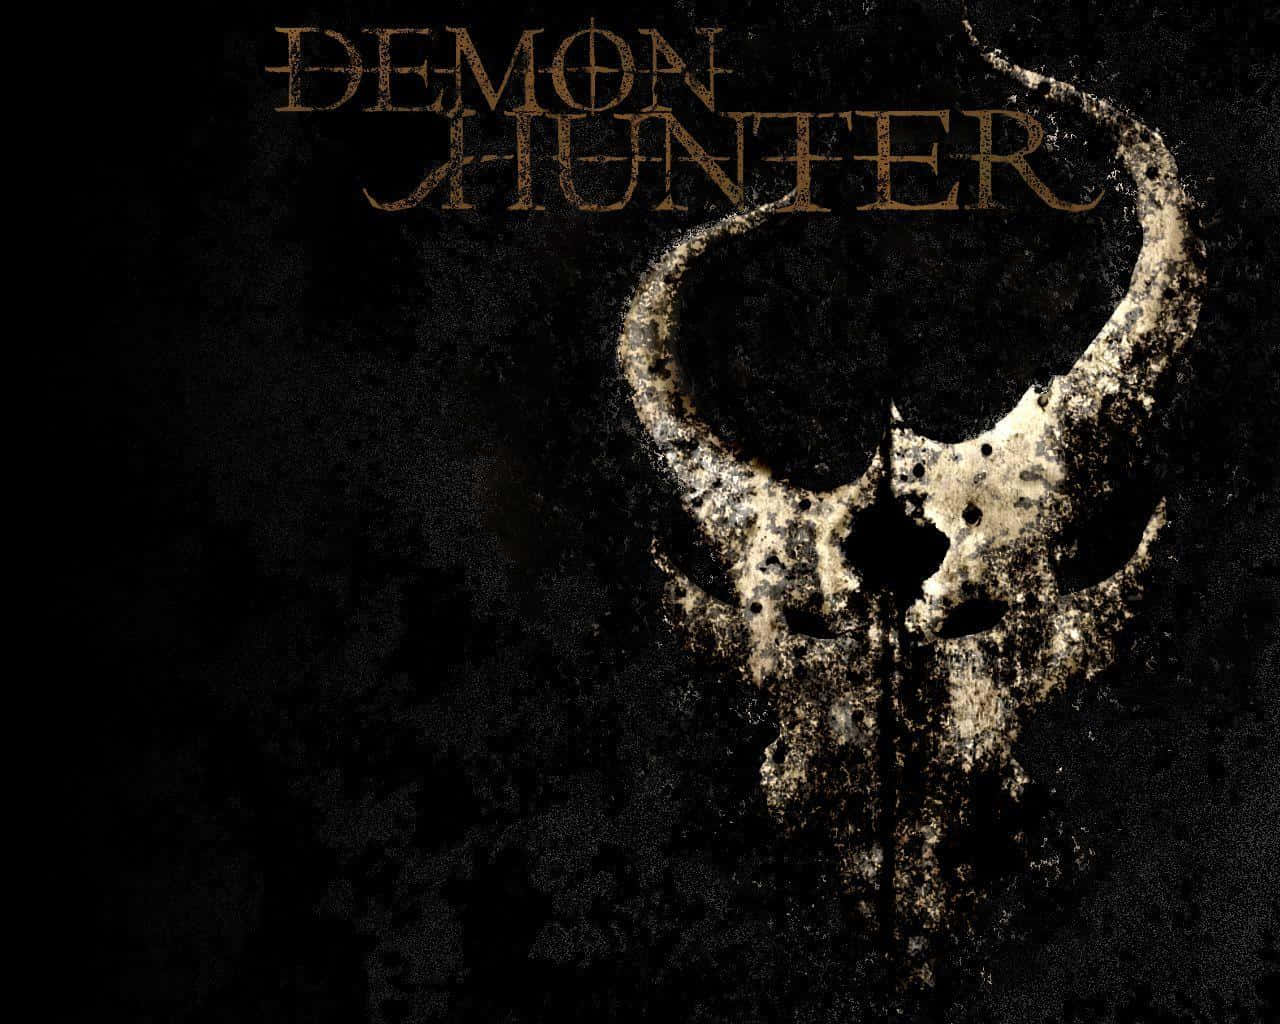 Evil has met its match - Demon Hunting Wallpaper